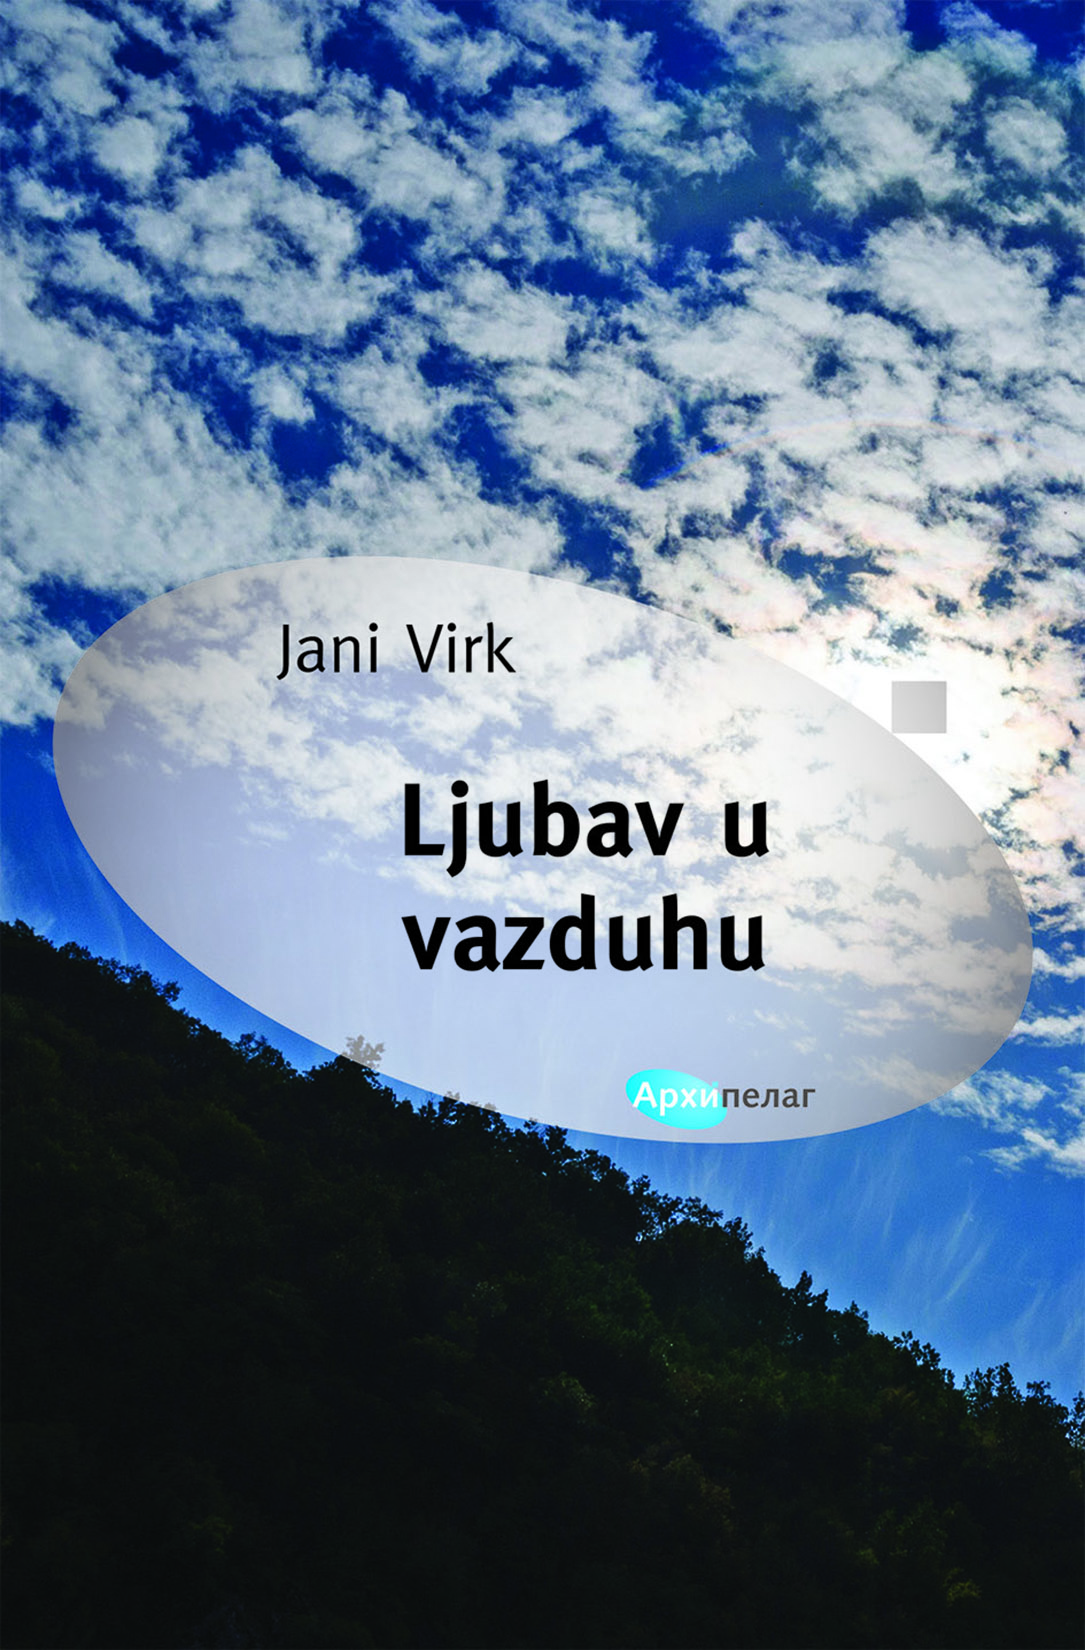 Jani Virk, Ljubav u vazduhu